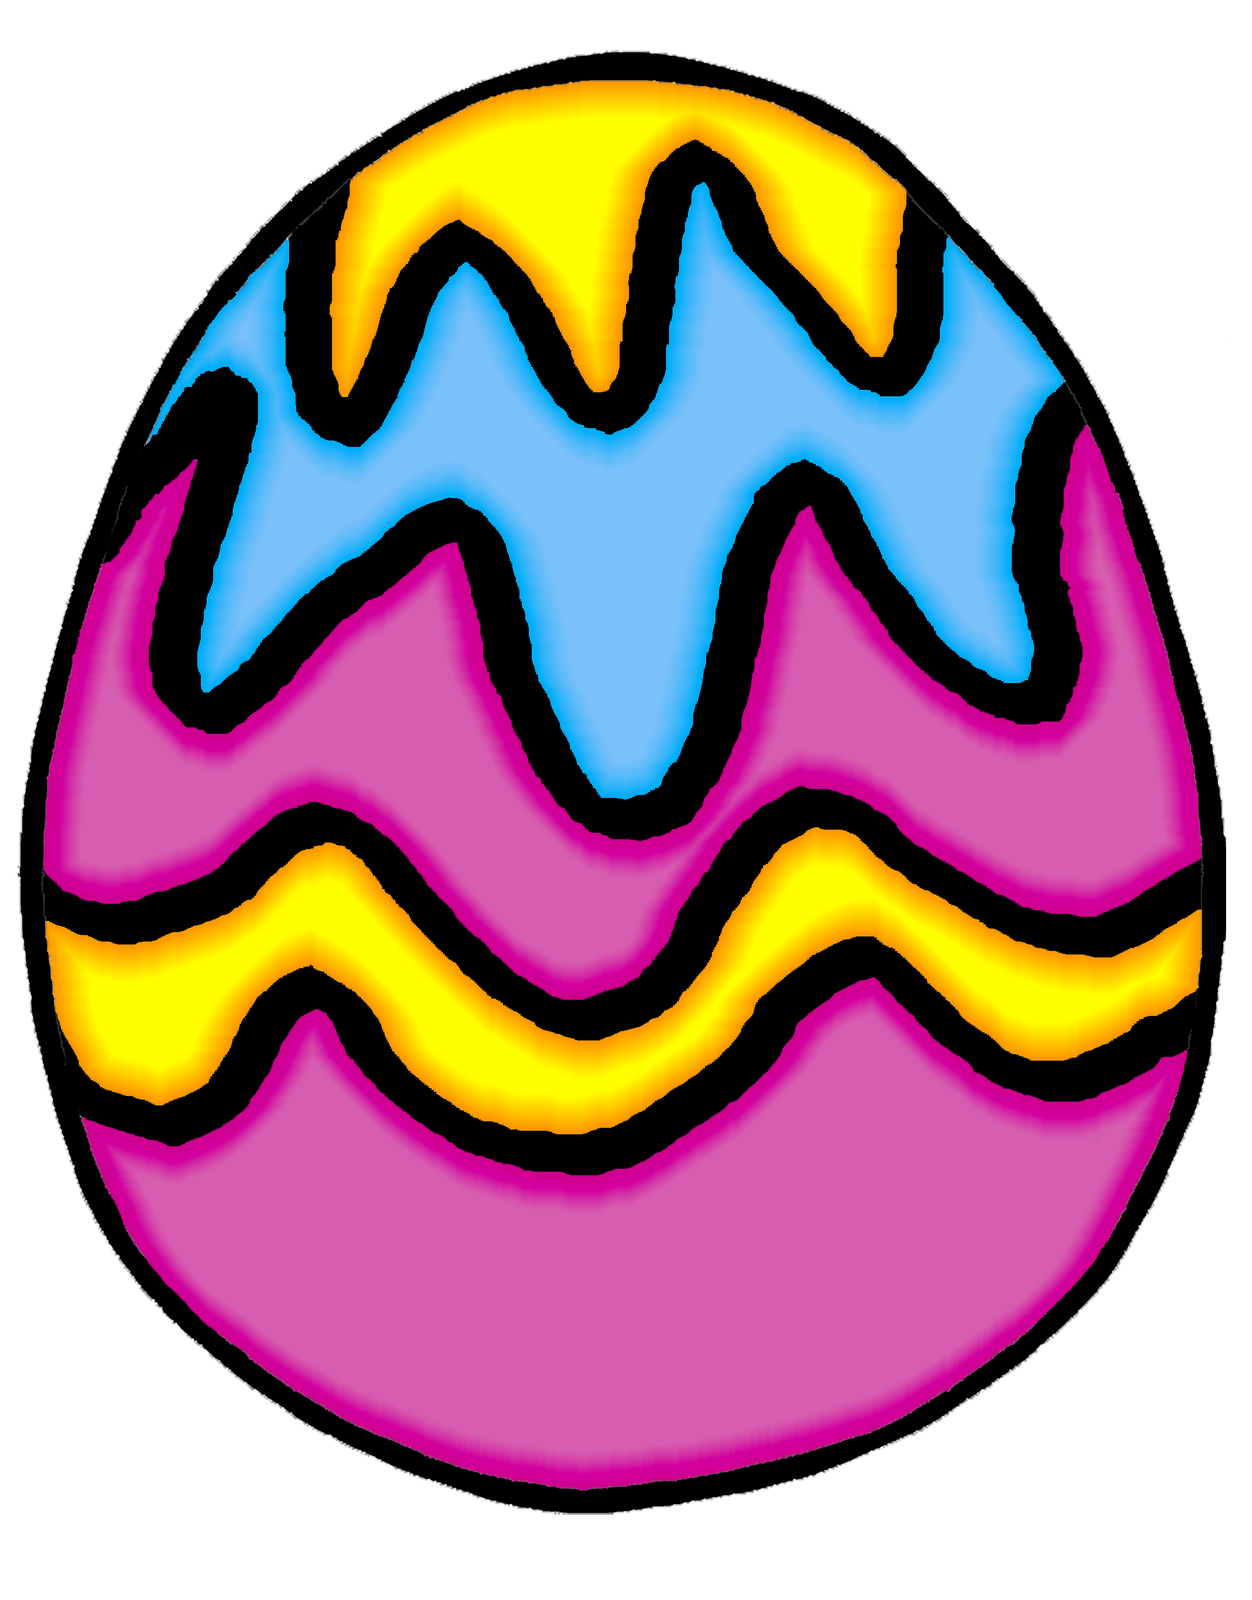 Clip Art Easter Eggs - Clipart library